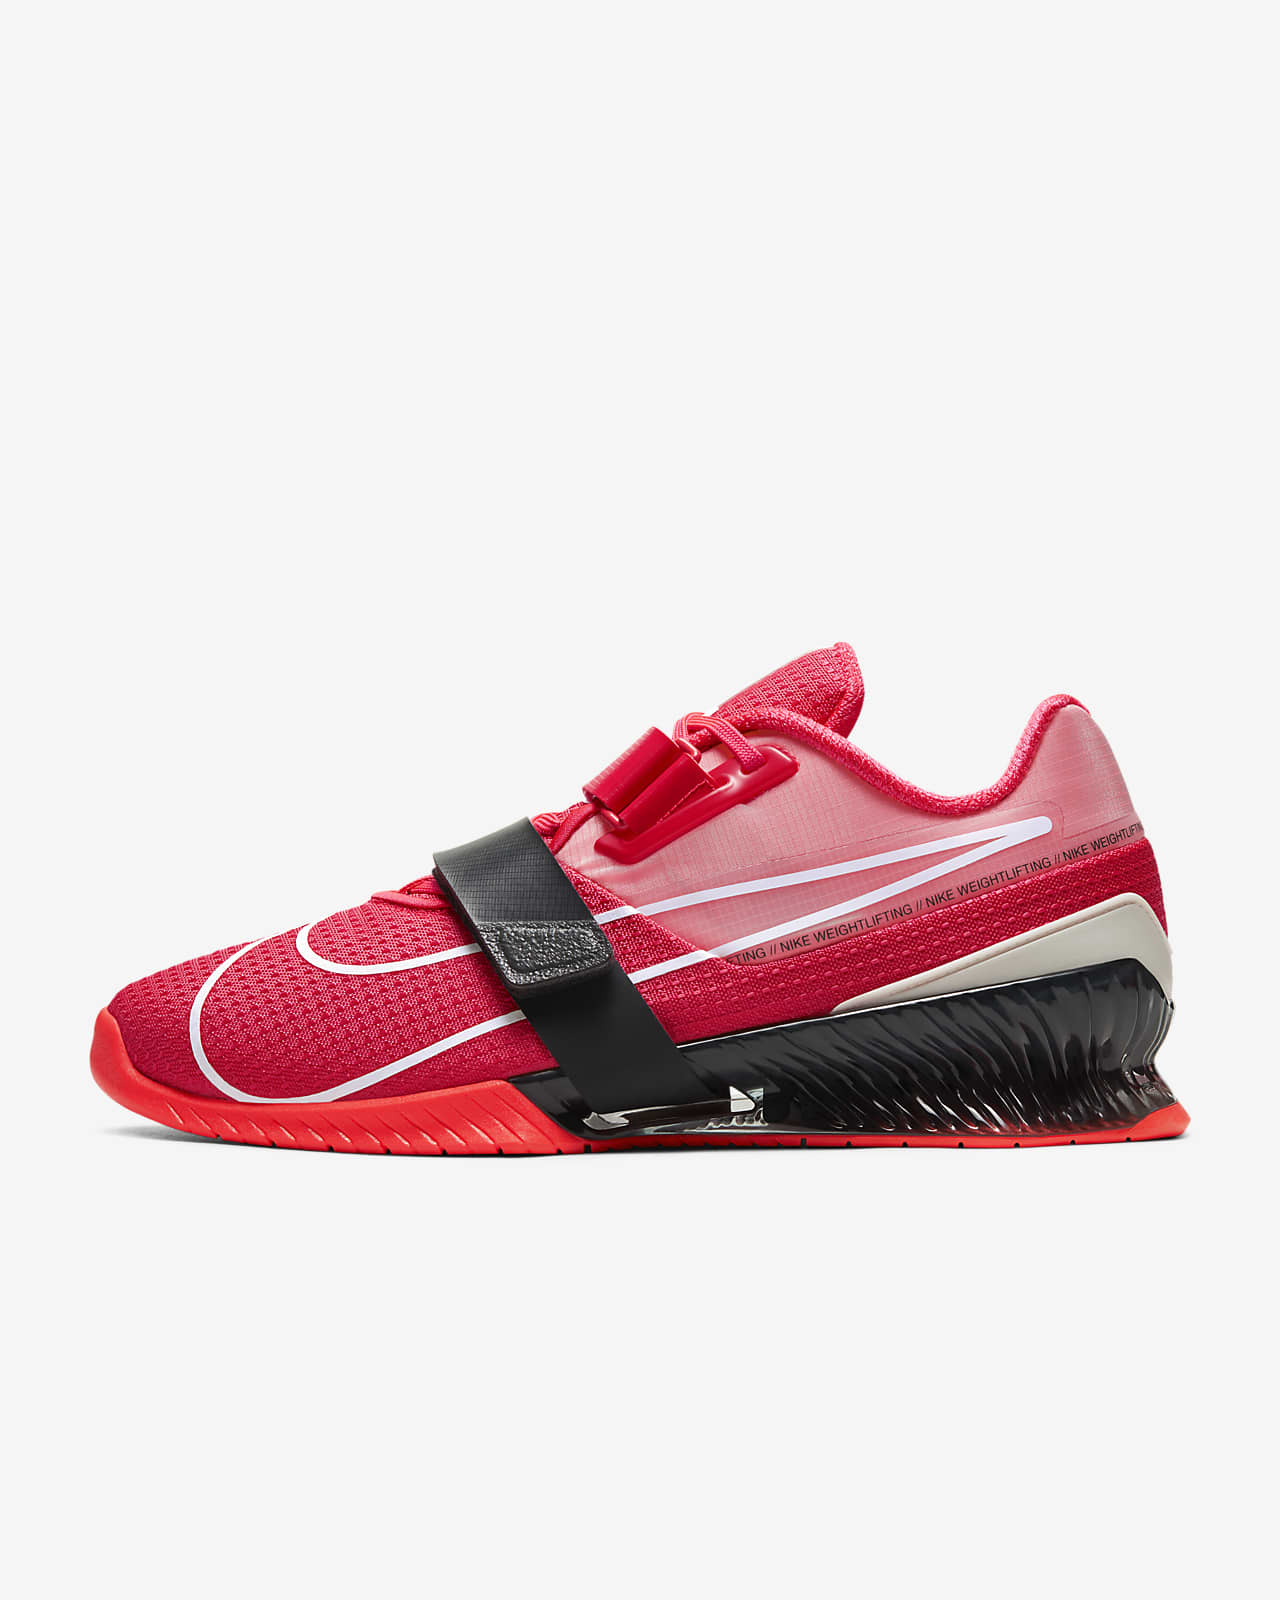 Nike Romaleos 4 Shoes.